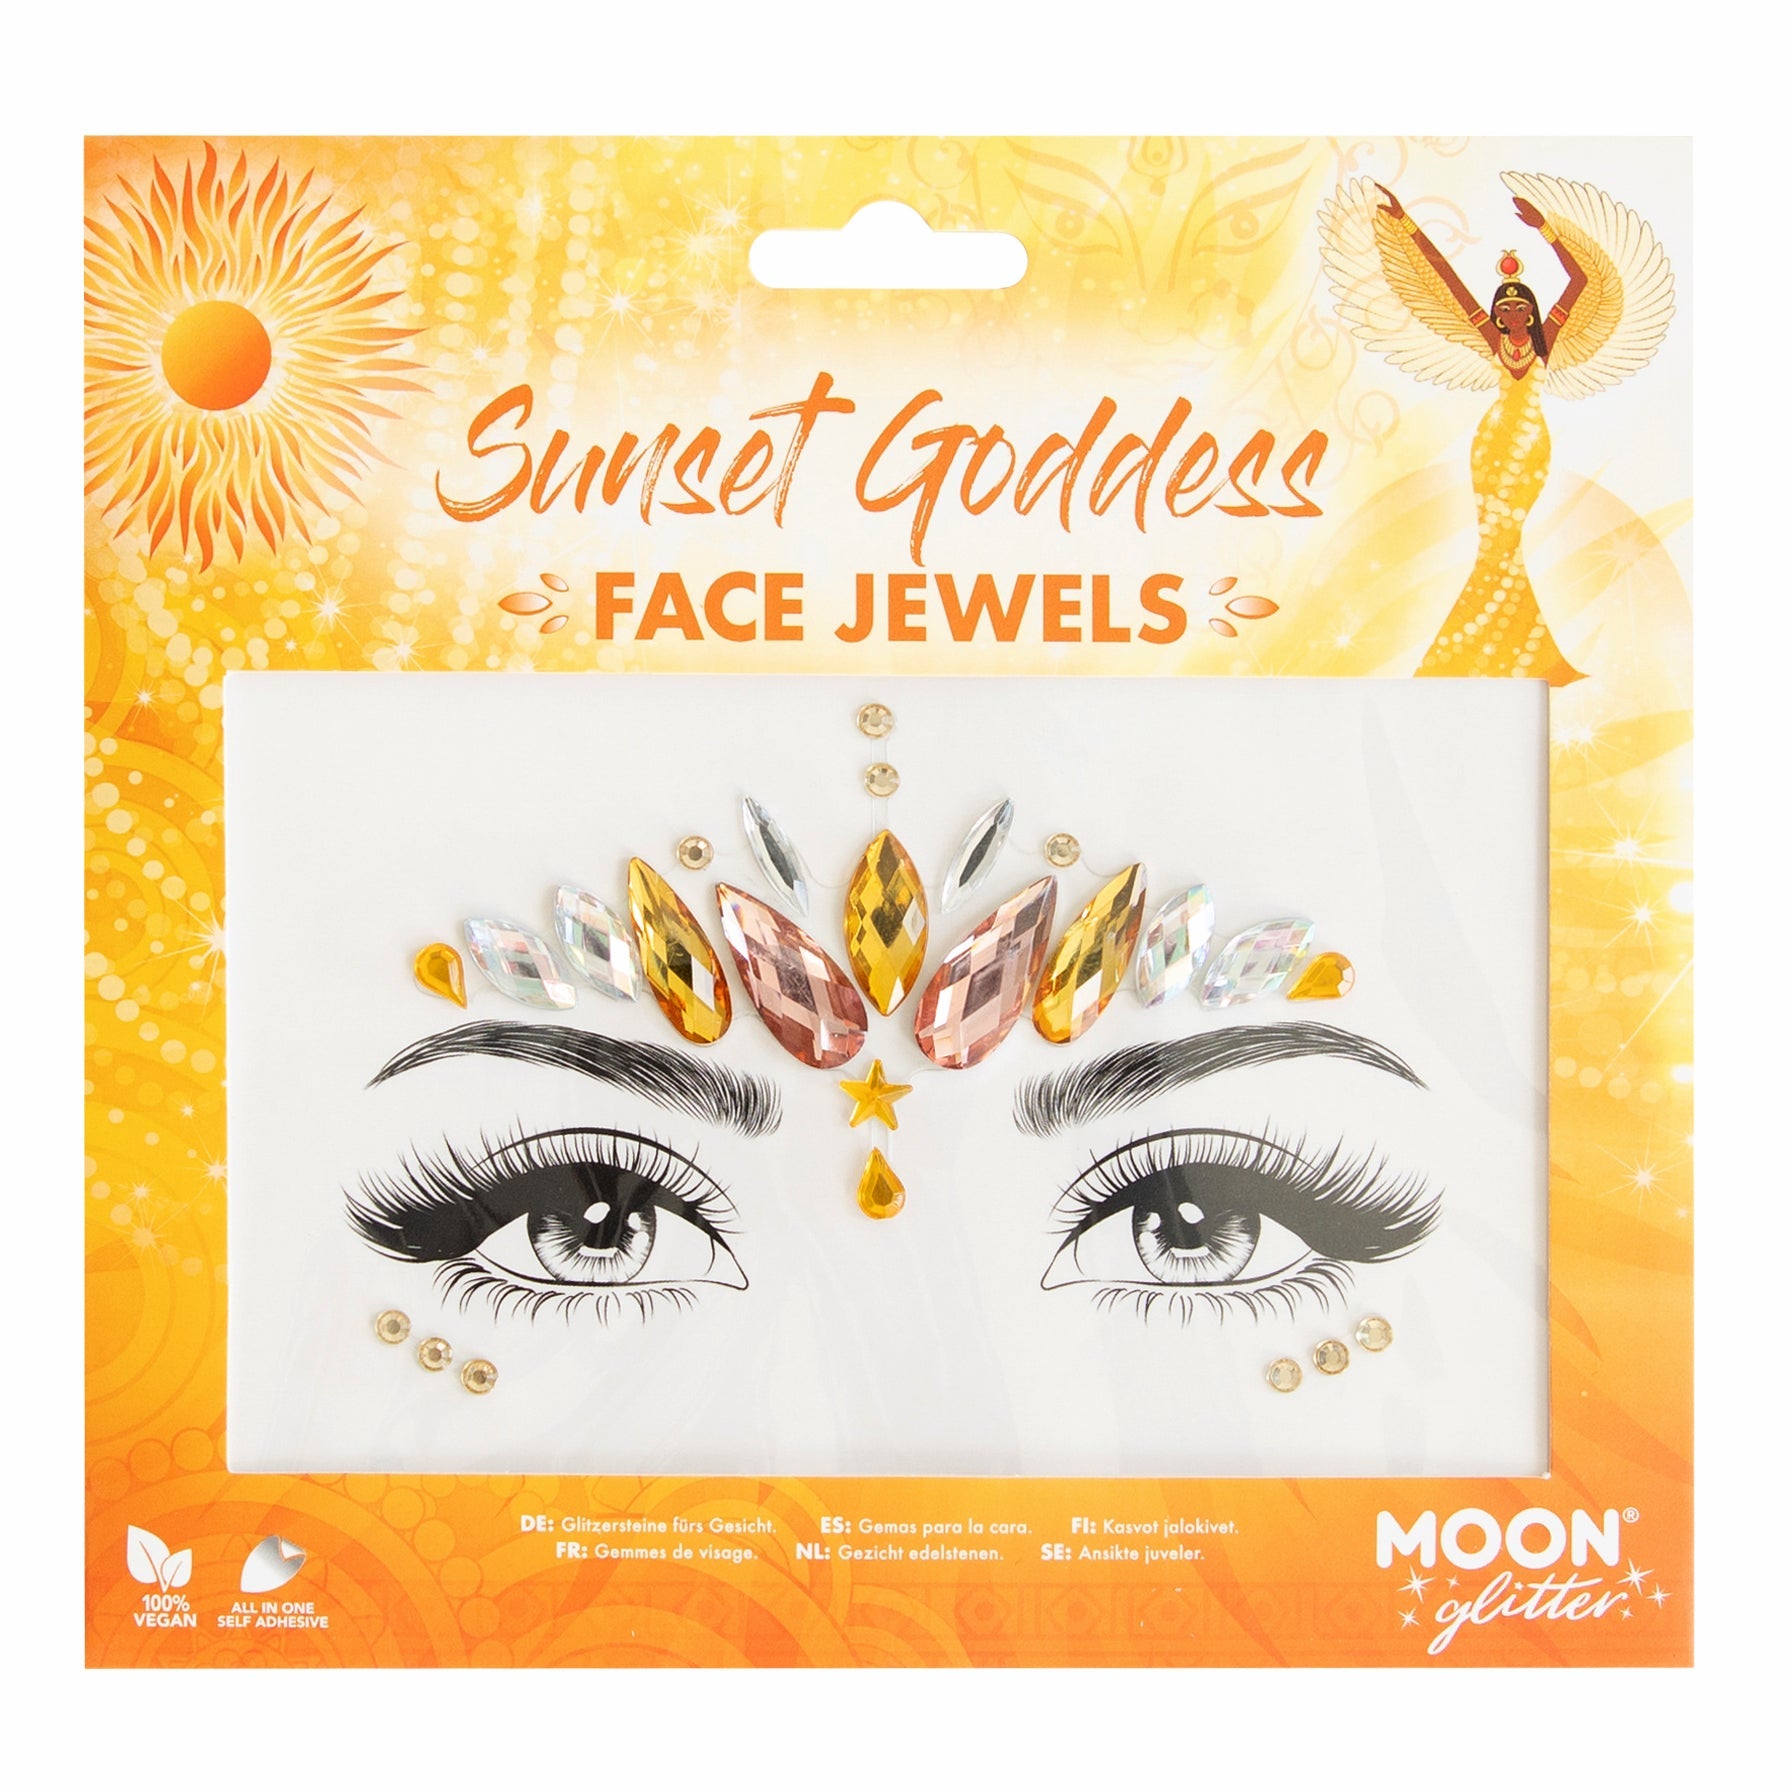 Sunset Goddess - Glitter Adhesive Face Gems, Jewels and Rhinestones